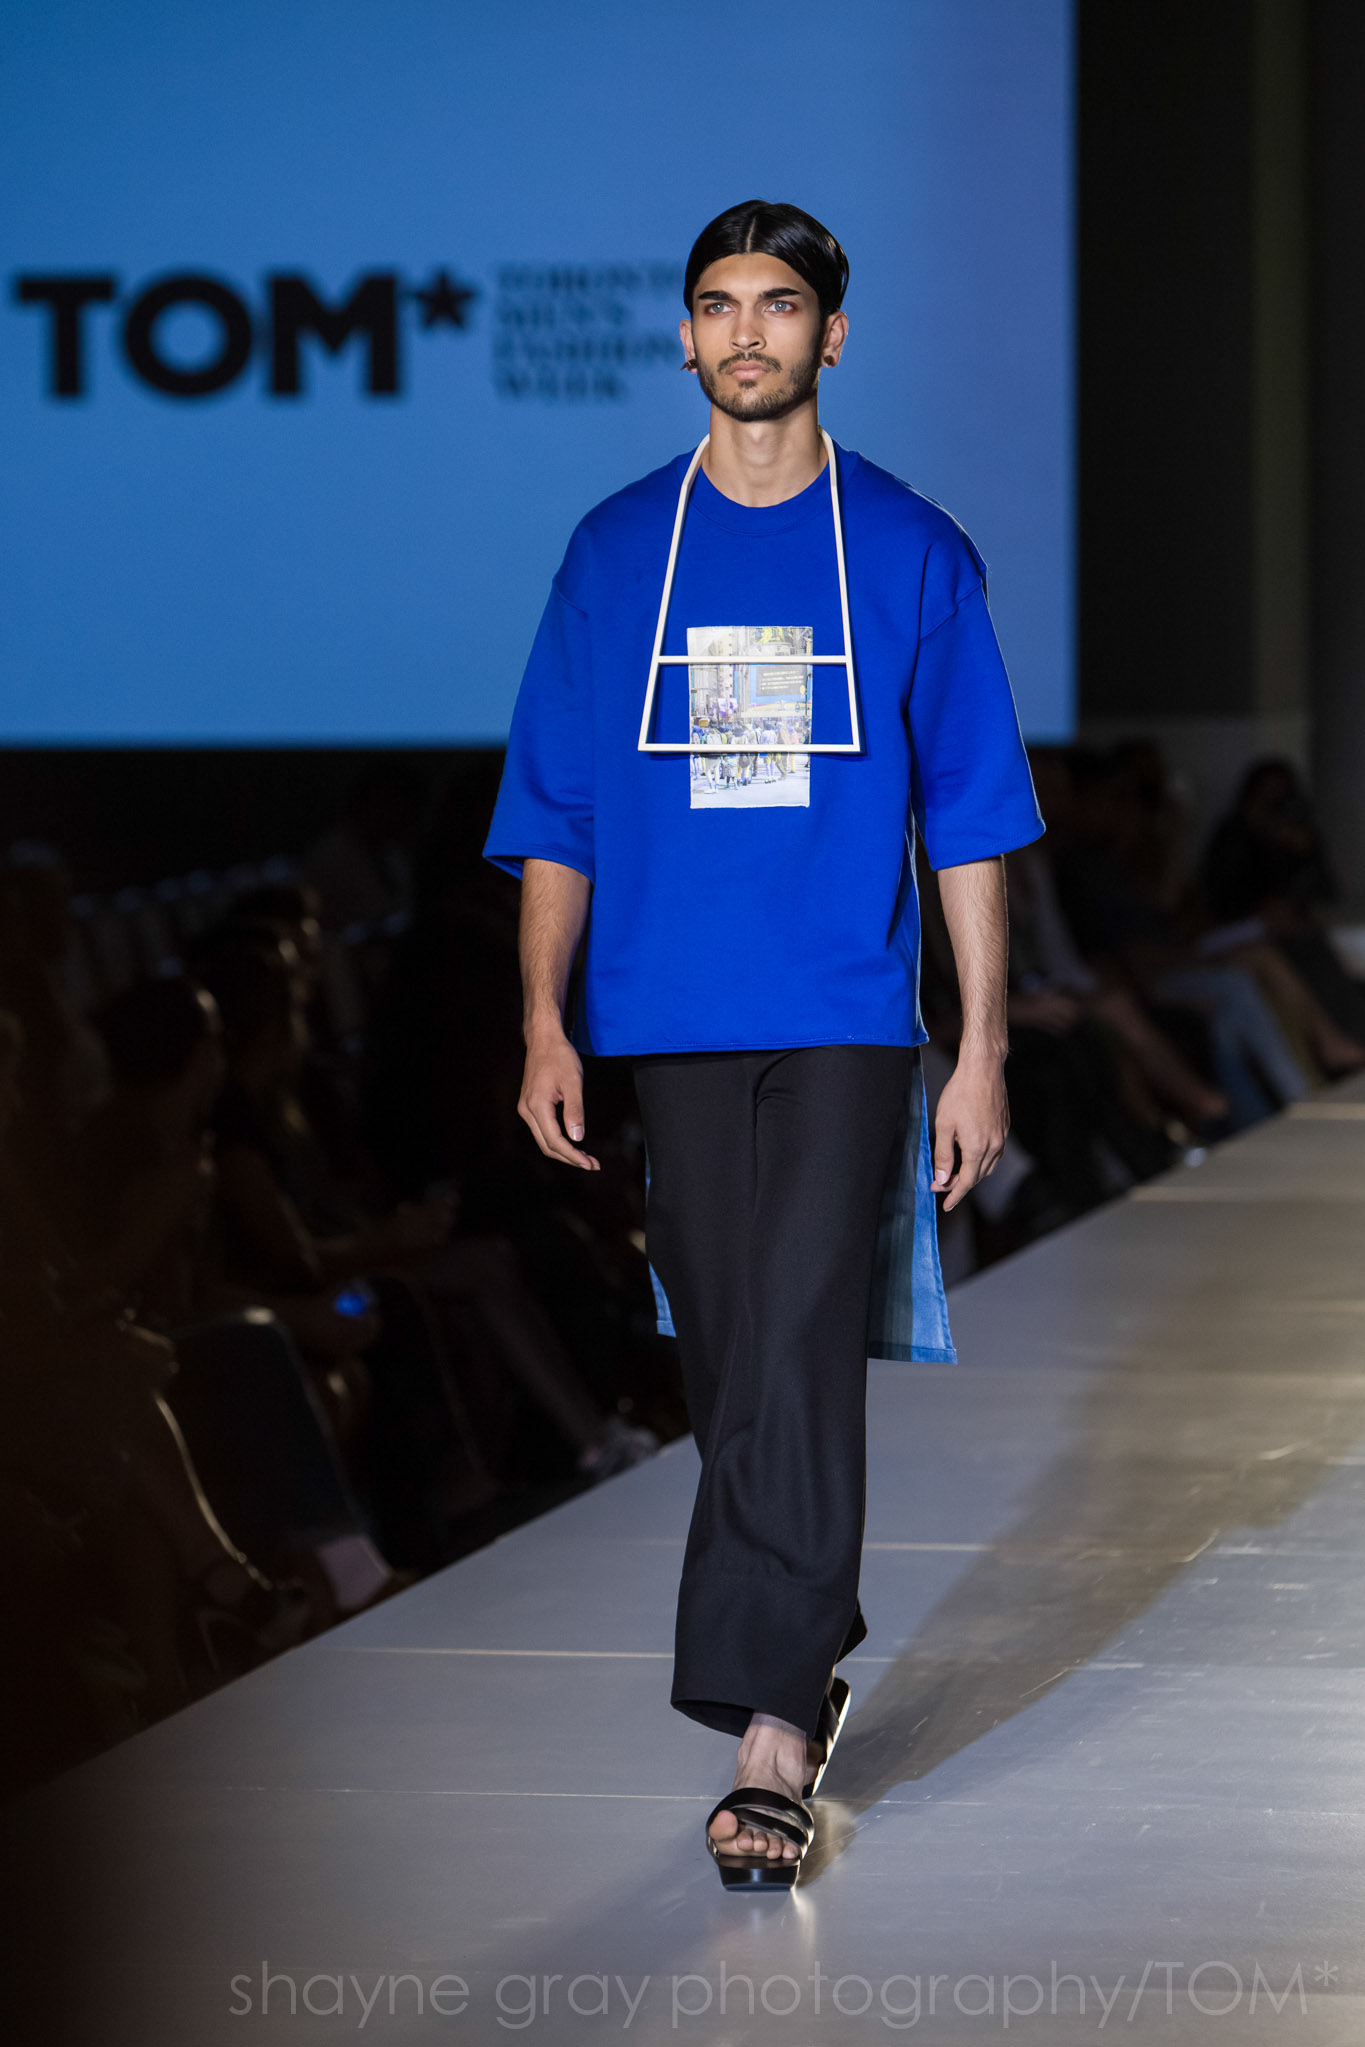 Shayne-Gray-Toronto-men's-fashion_week-TOM-wrkdept-8686.jpg